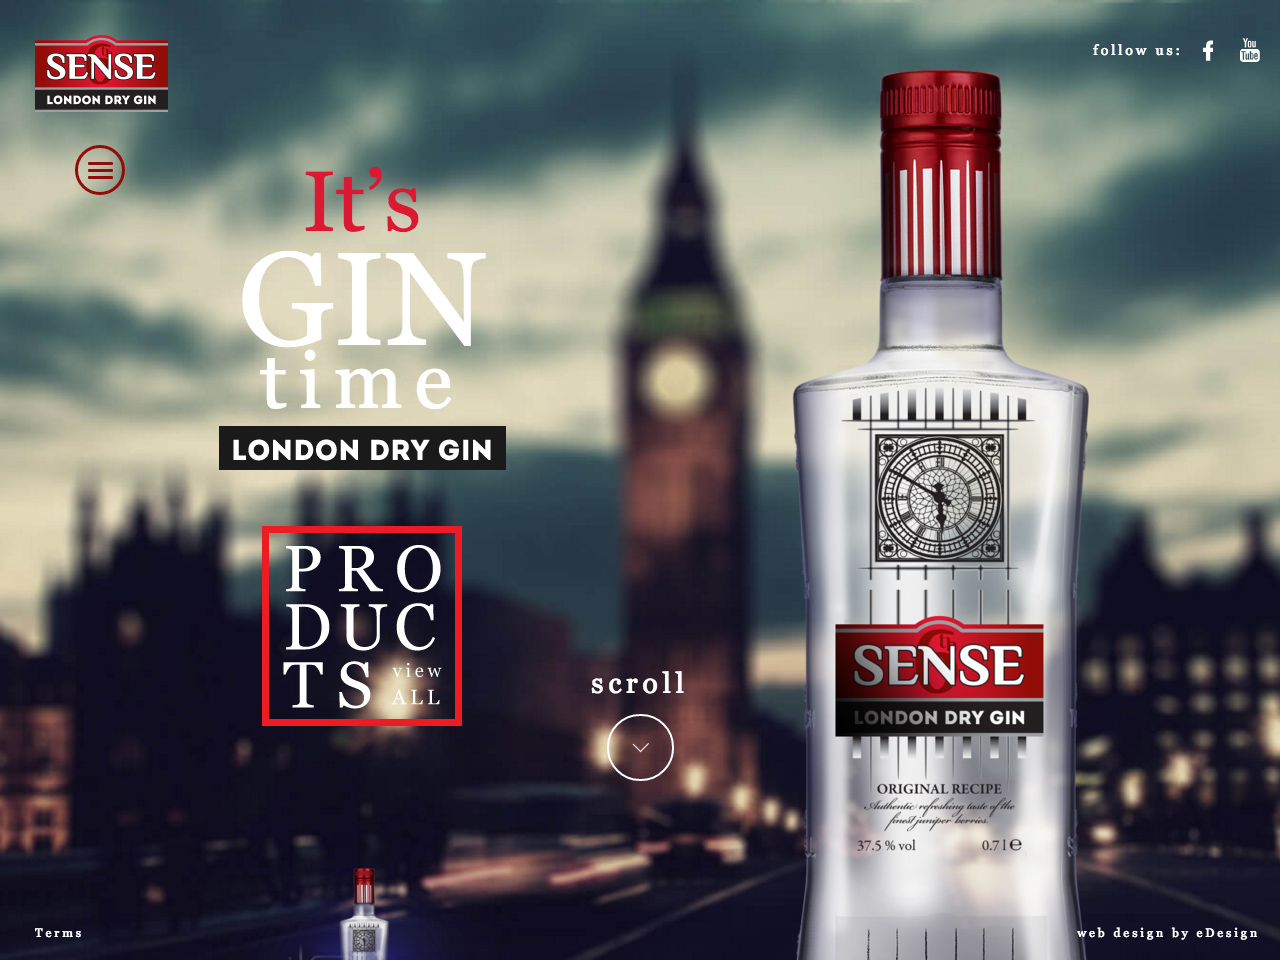 6th Sense London dry gin